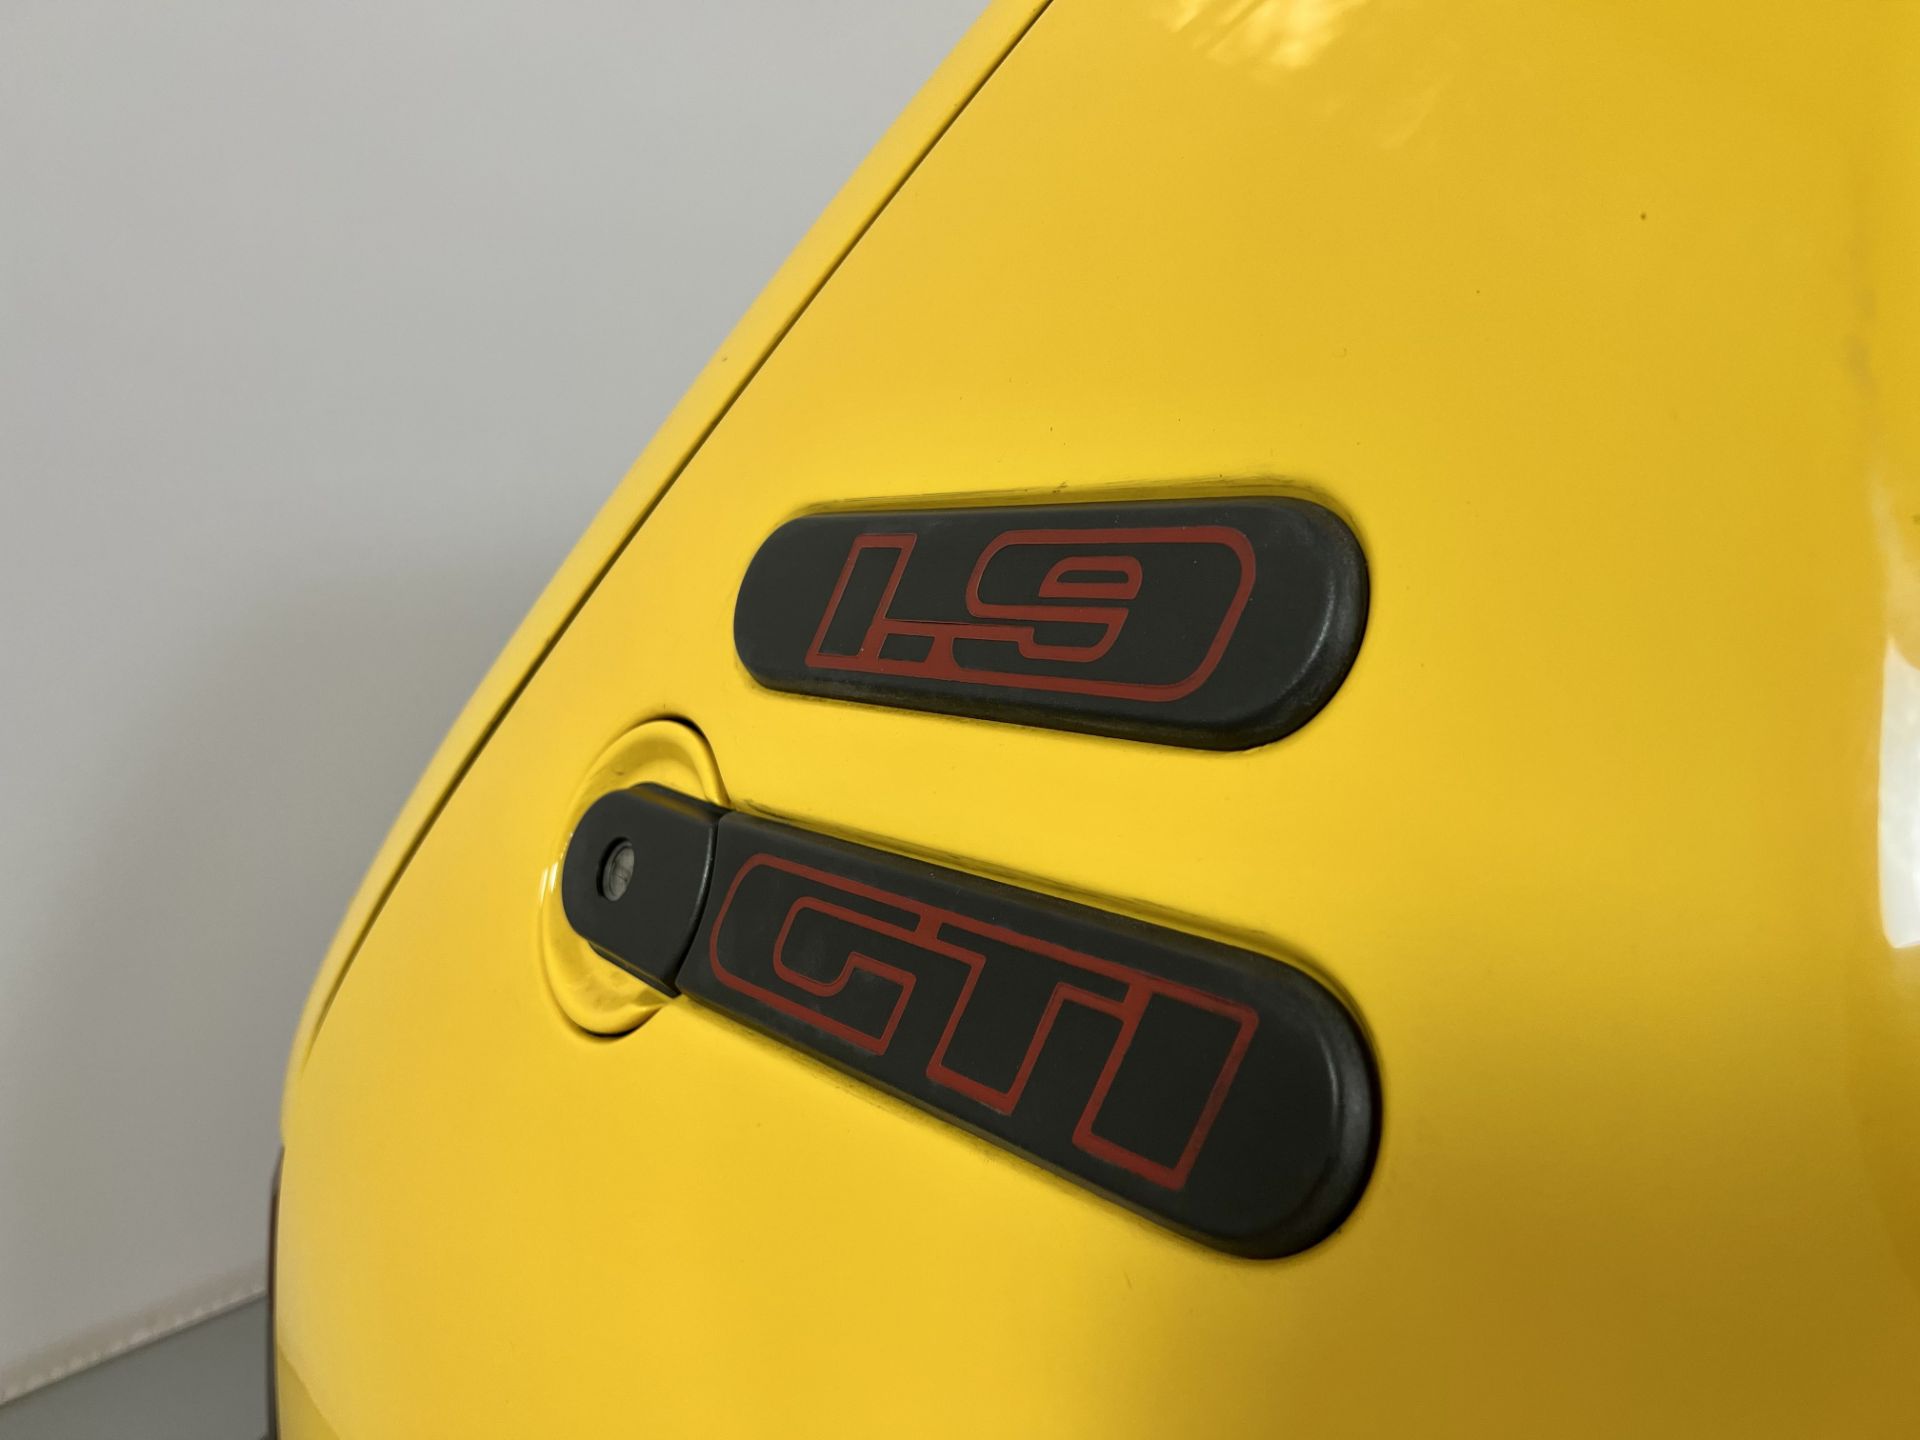 Peugeot 205 GTI Prototype - Image 13 of 30